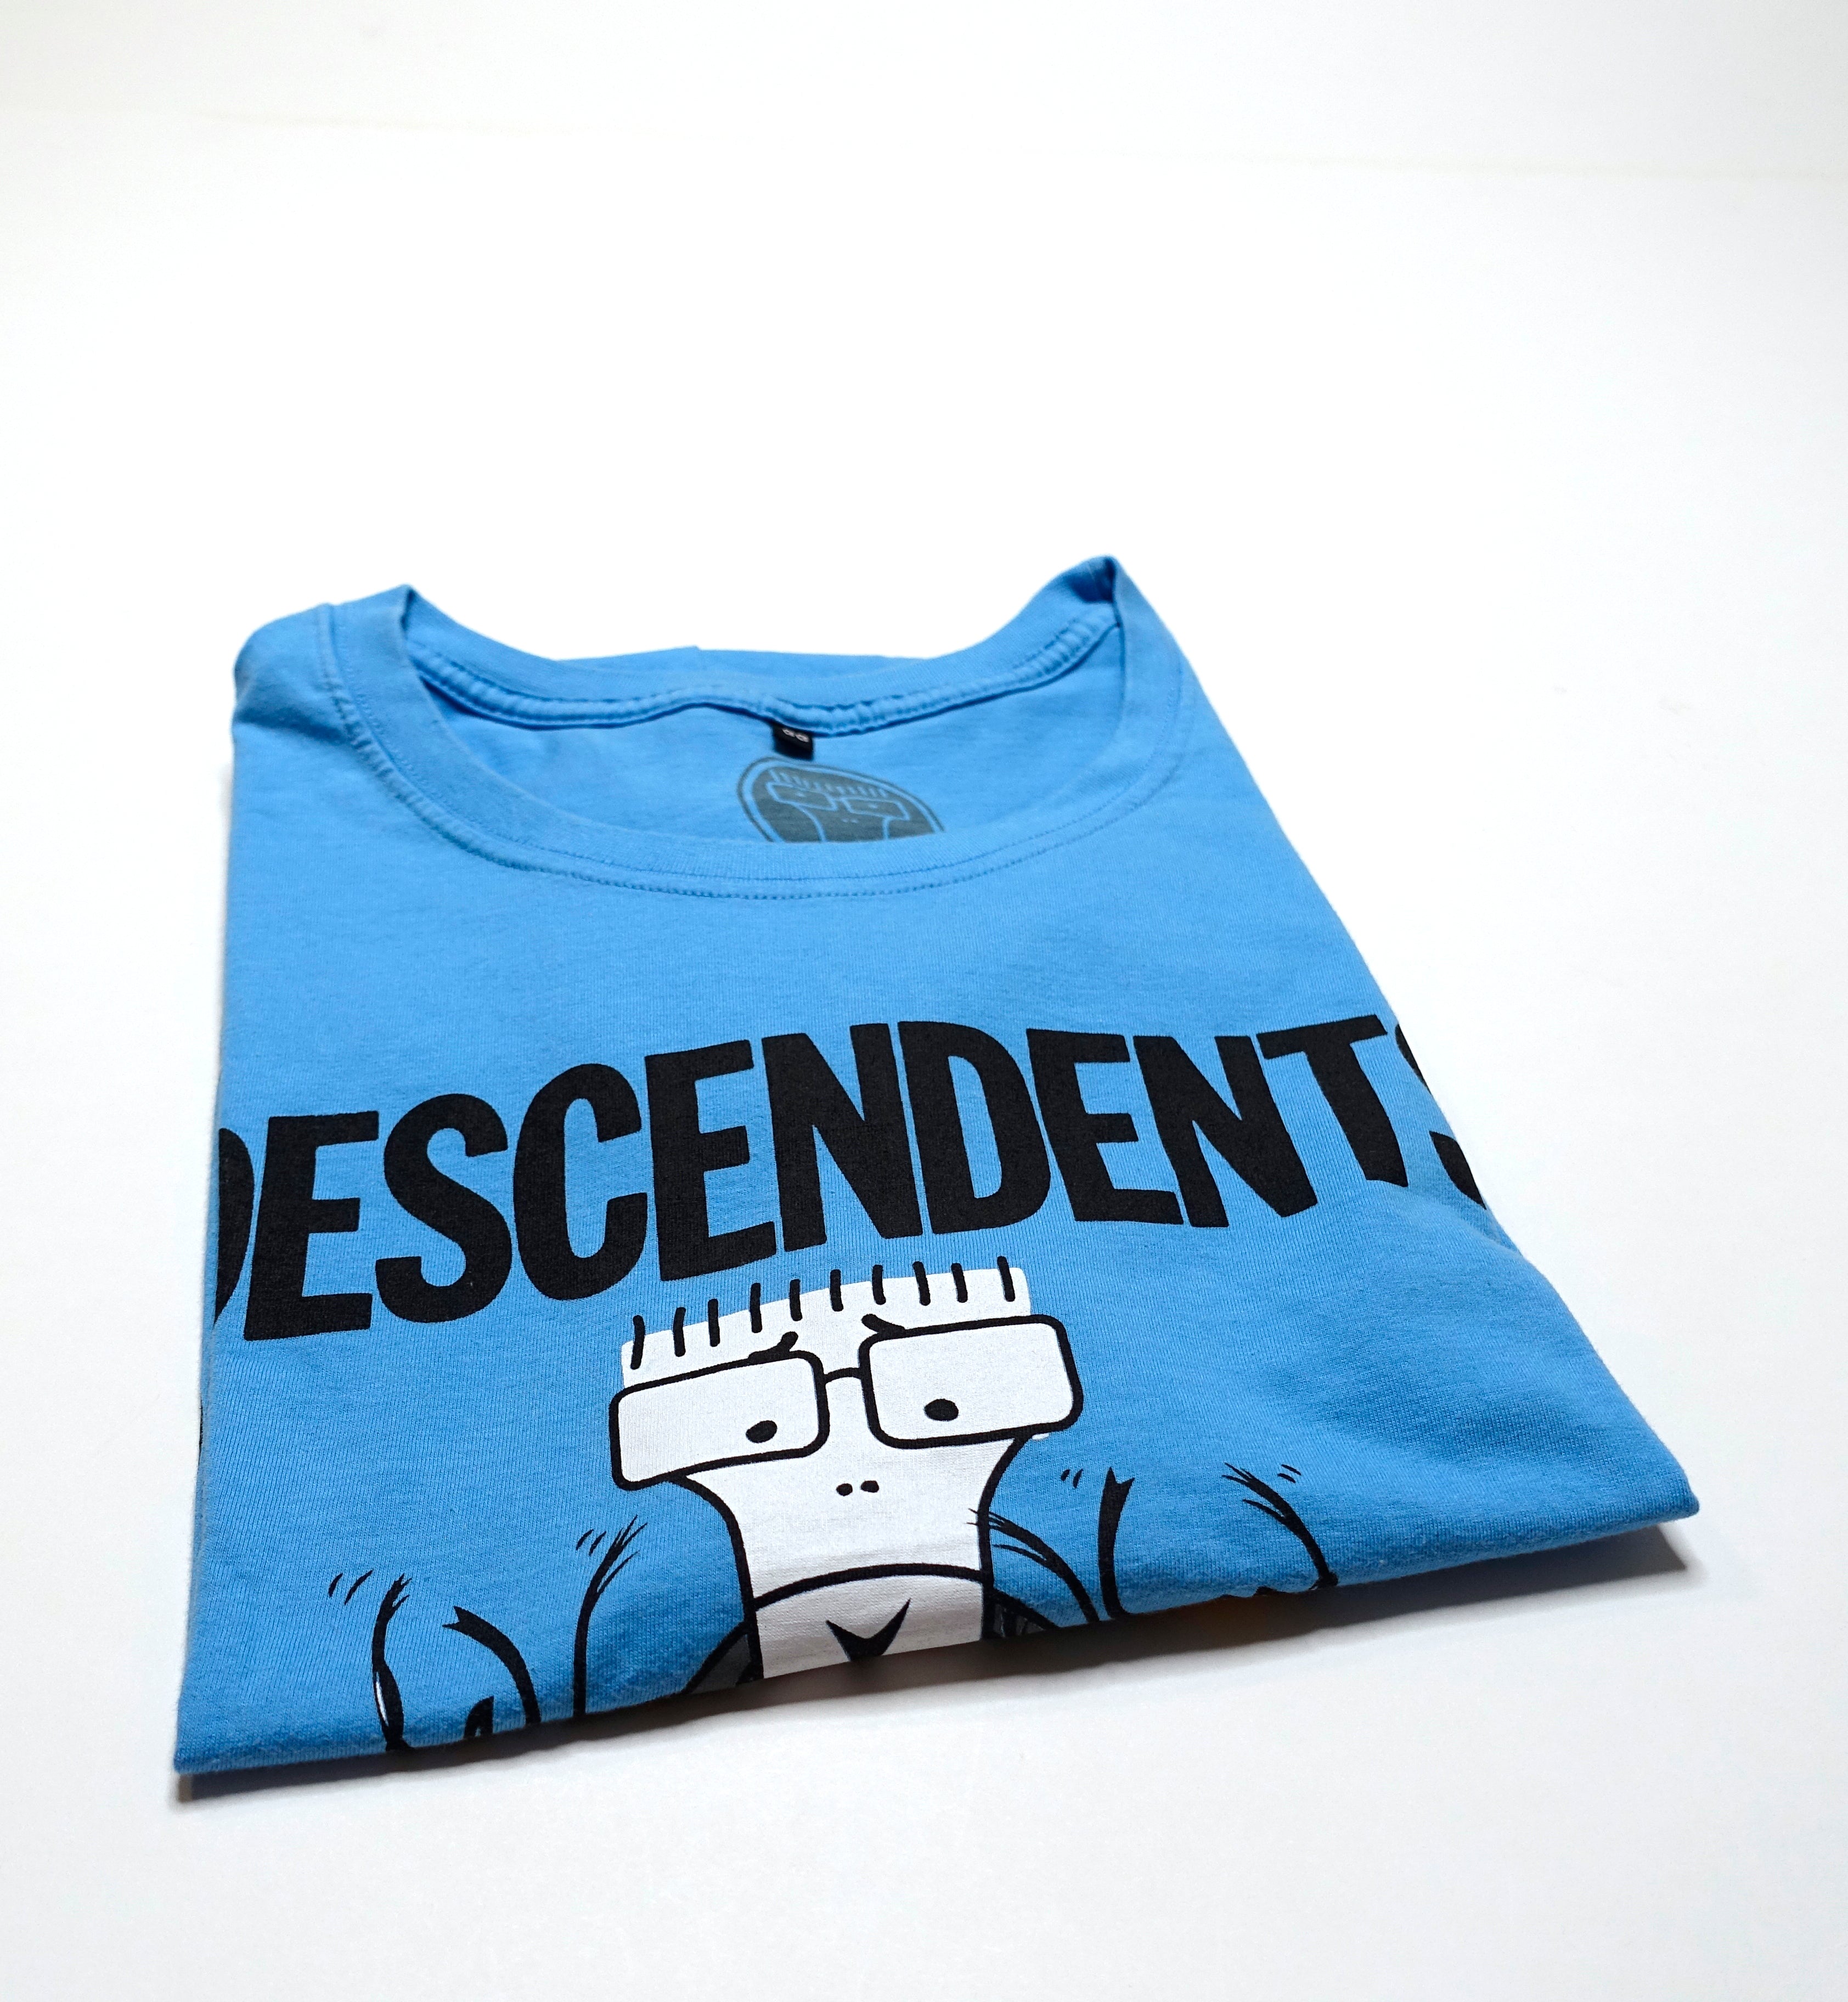 Descendents - Costa Rica 2016 Tour Shirt Size XL / Large